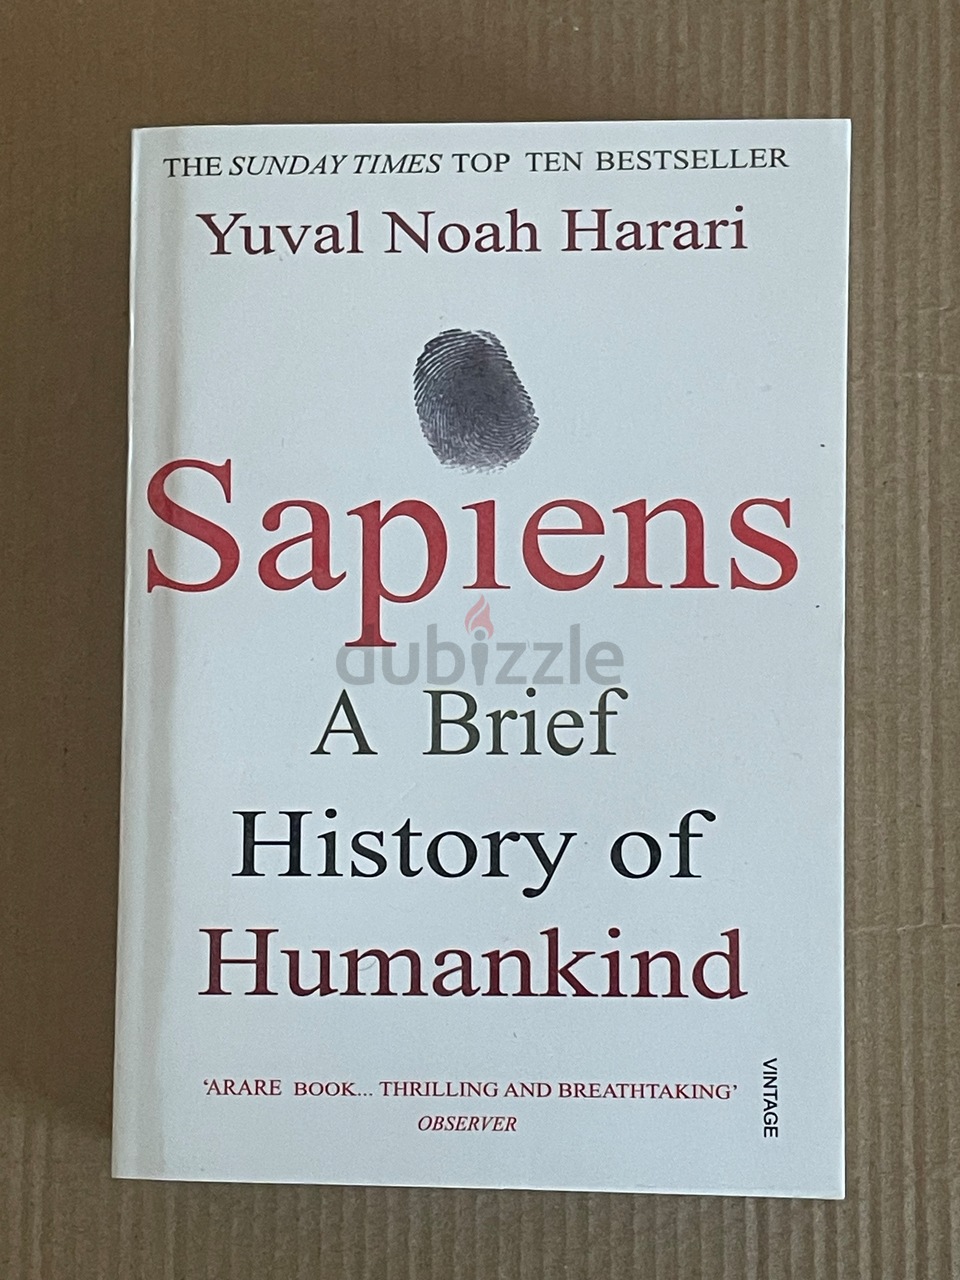 sapiens book